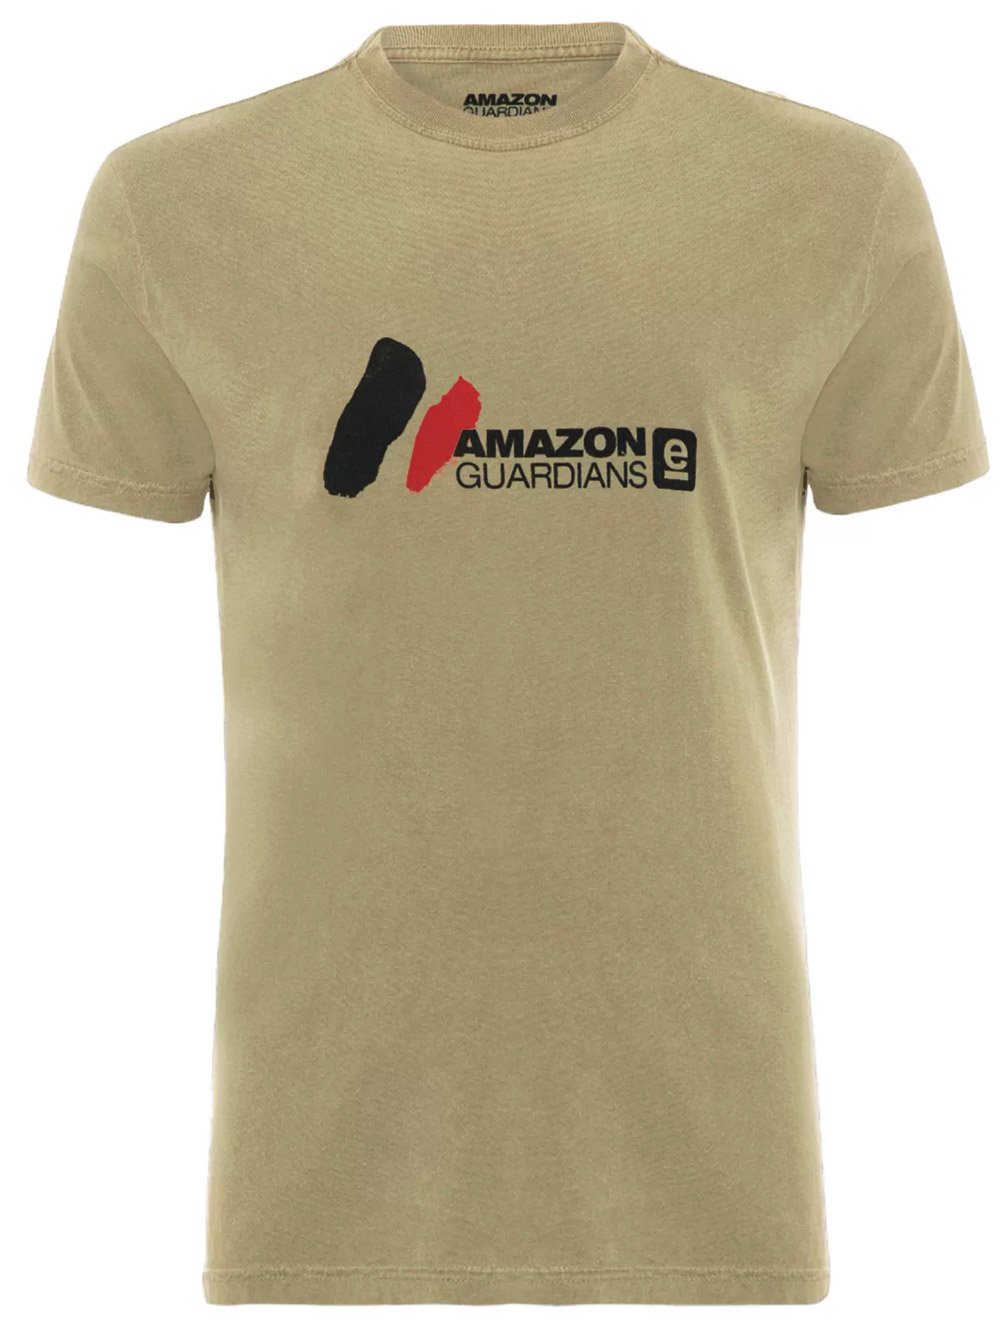 Camiseta Osklen Masculina Regular Eco Dye Amazon Guardians Cáqui